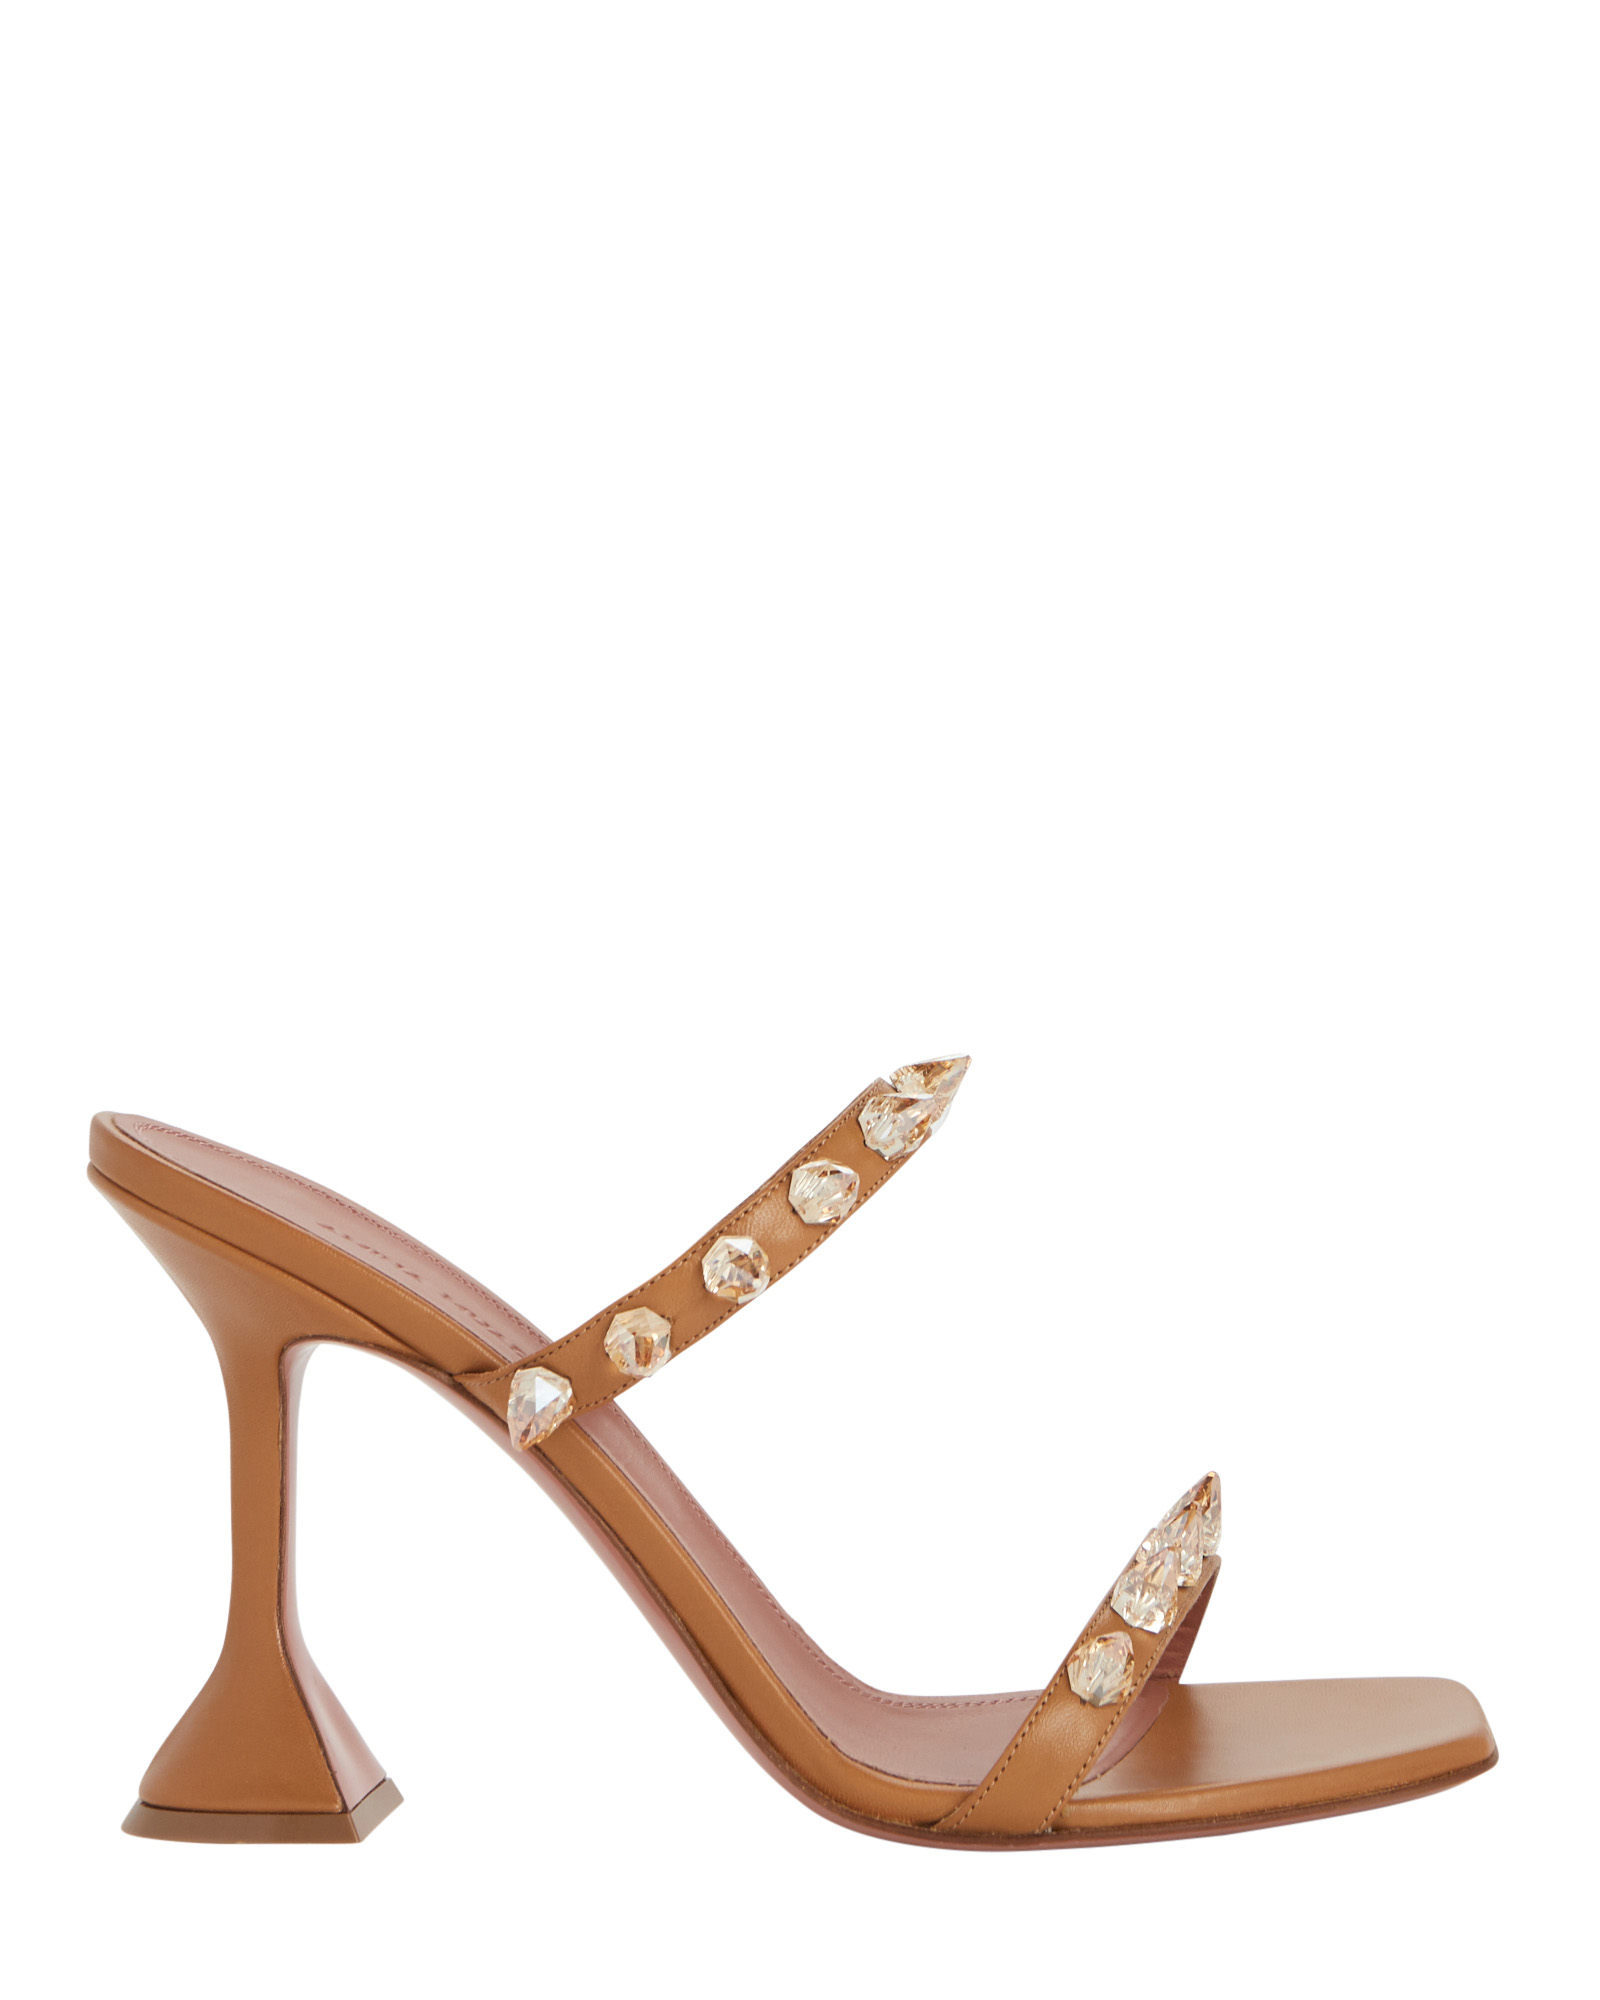 Amina Muaddi Julia Leather Spike Sandals | INTERMIX®